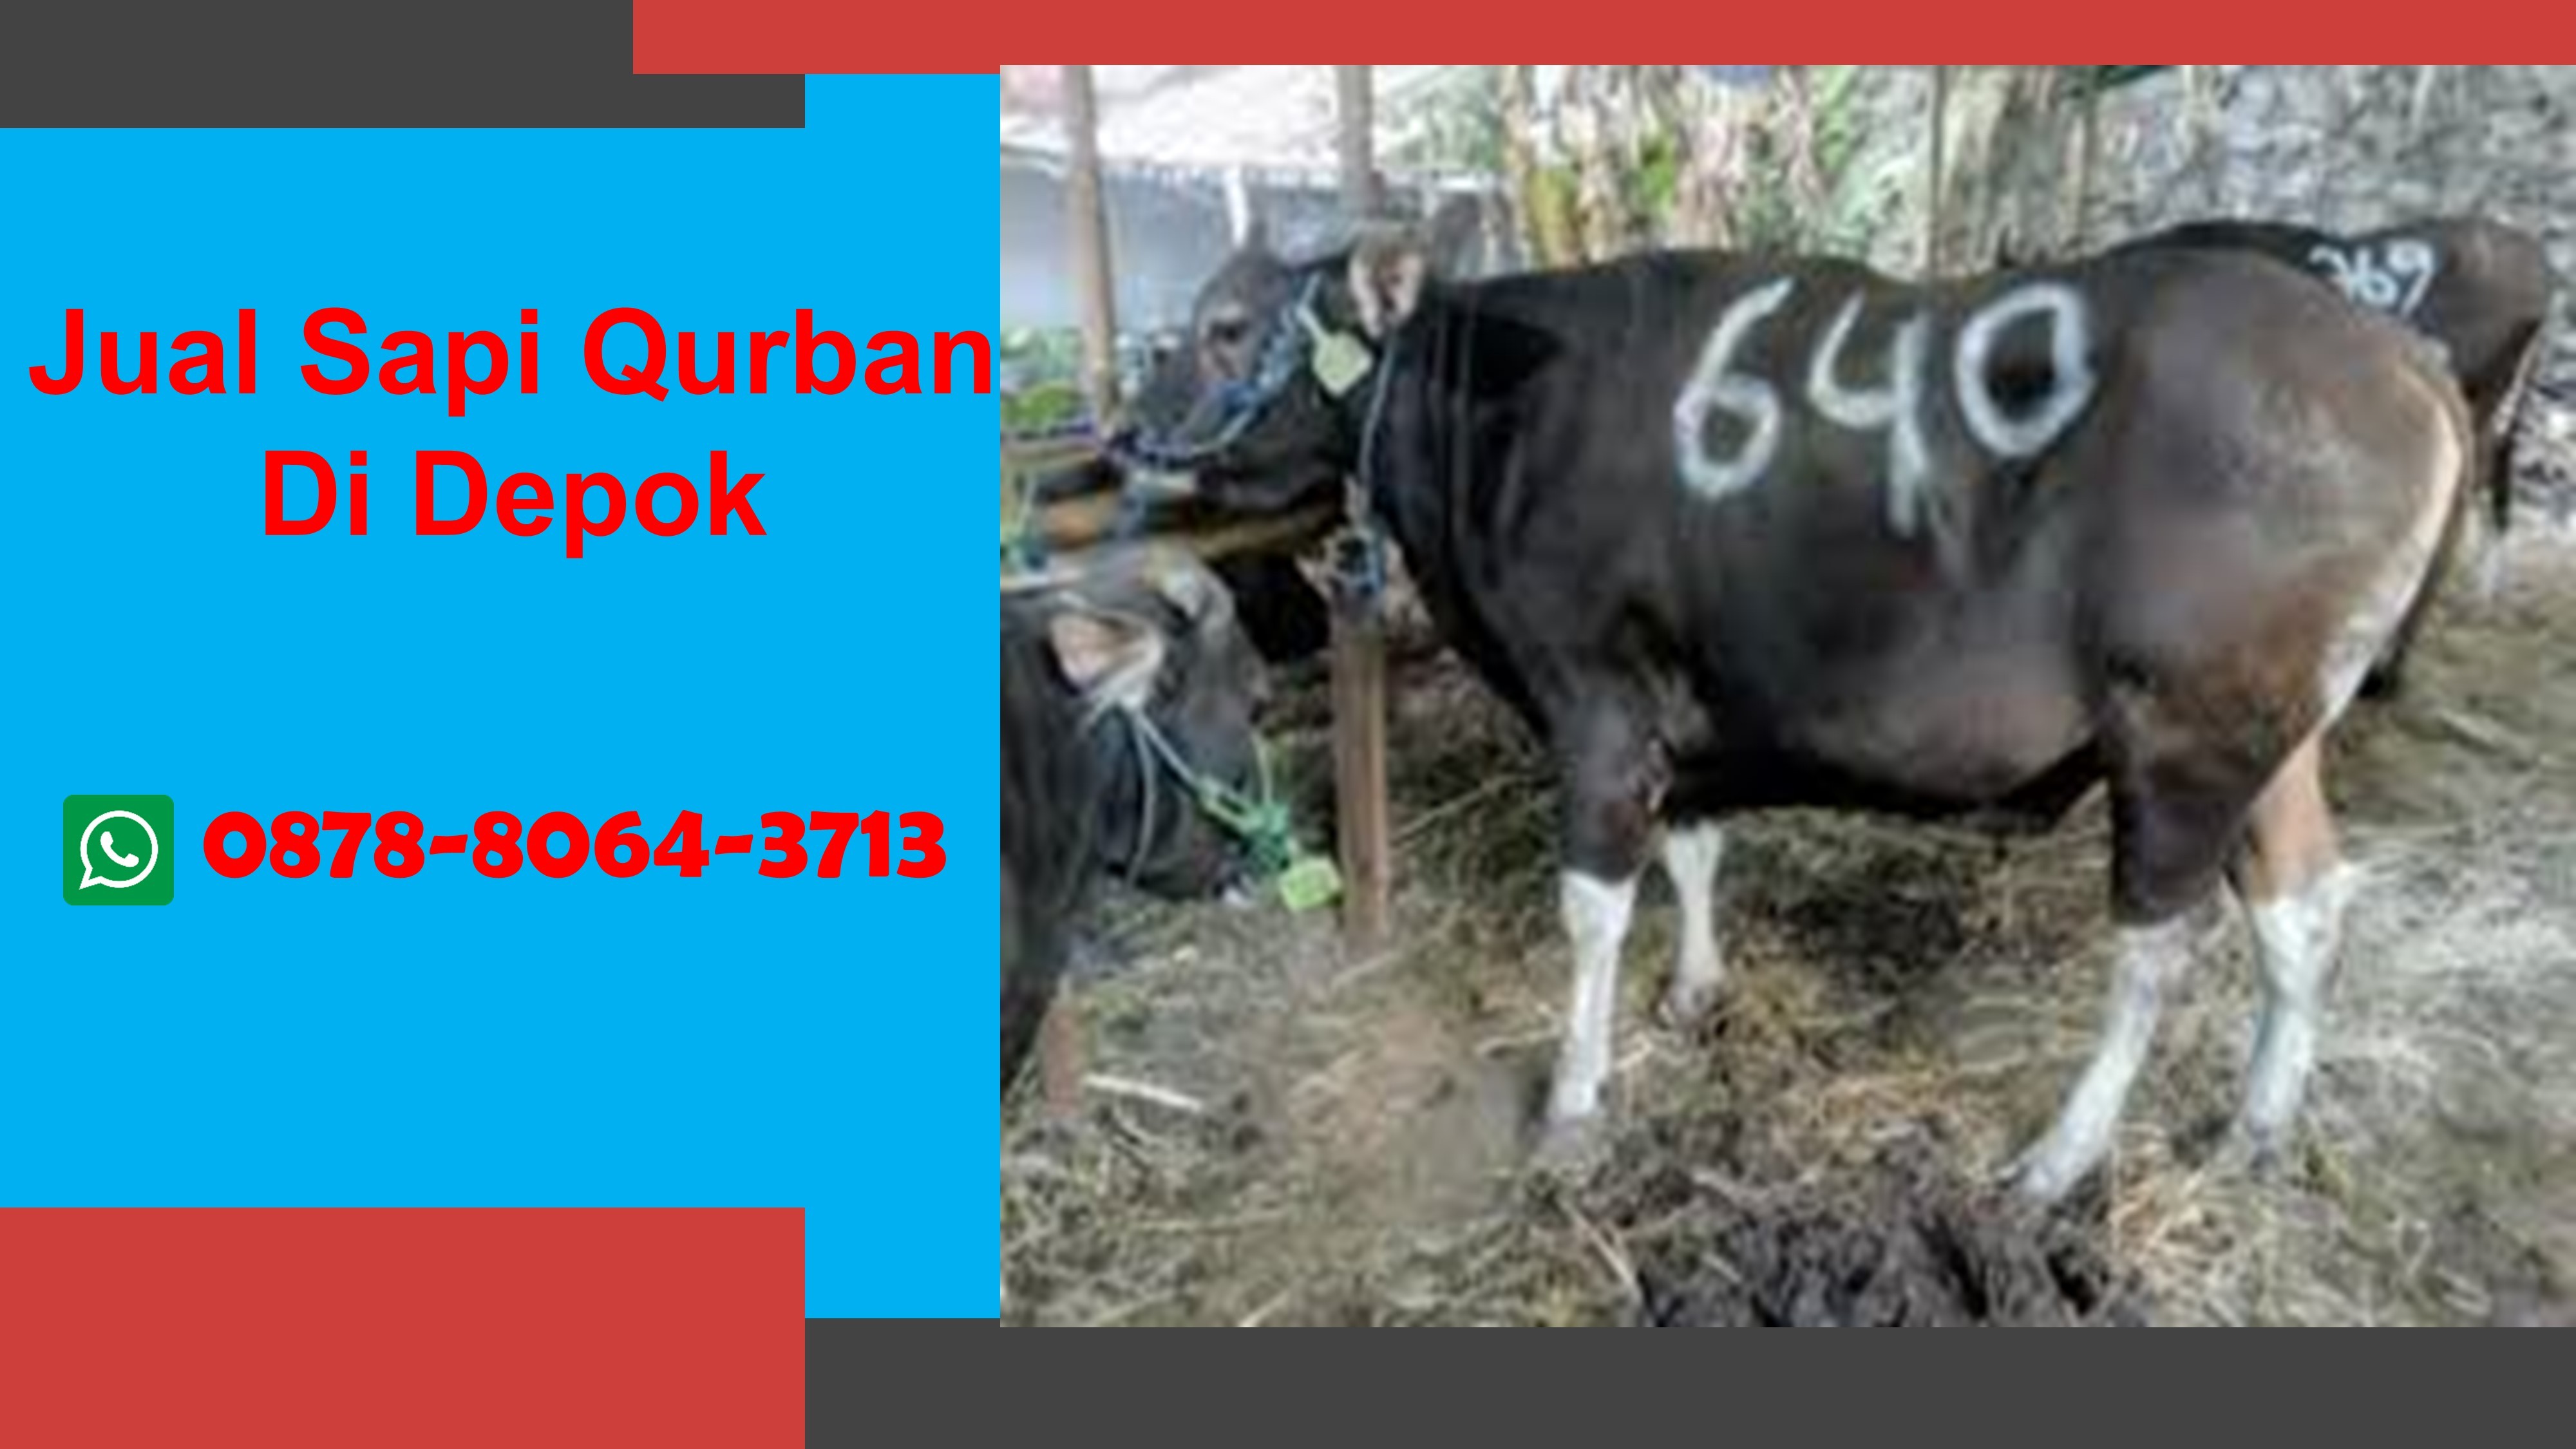 WA 0878-8064-3713, Tempat Pedagang Sapi Qurban Pondok Jaya Kota Depok
